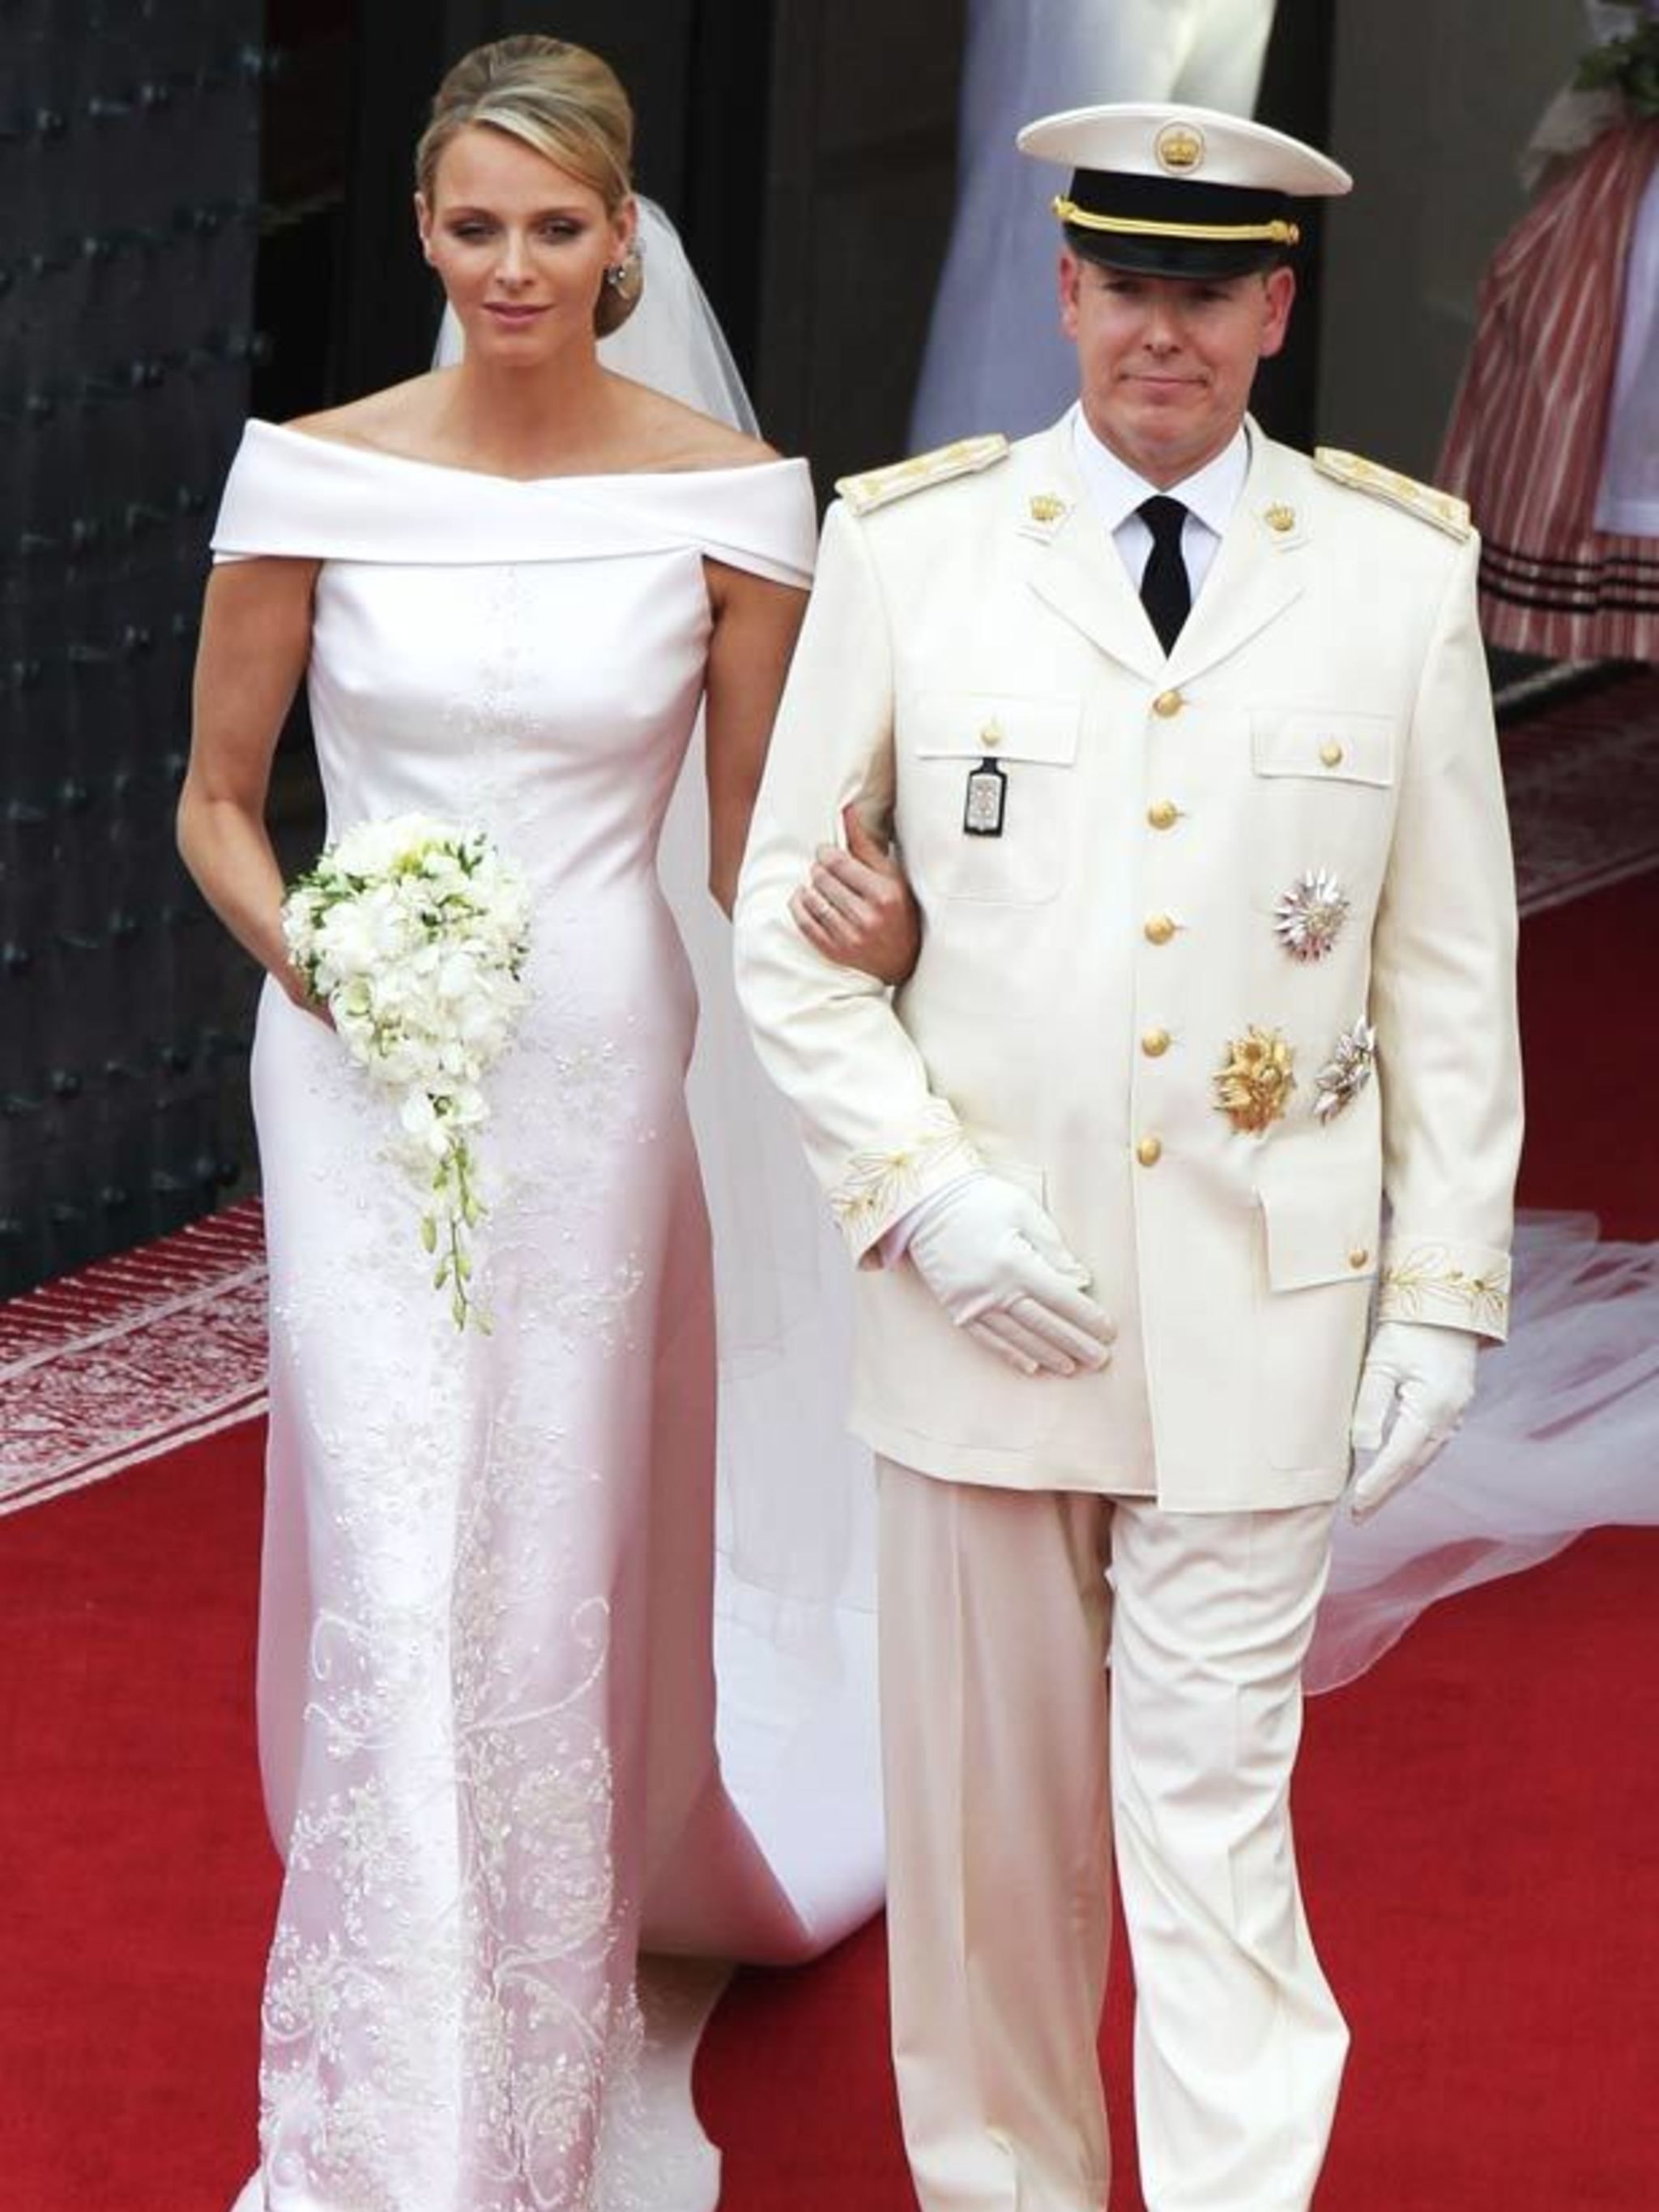 Armani designs Monaco wedding gown